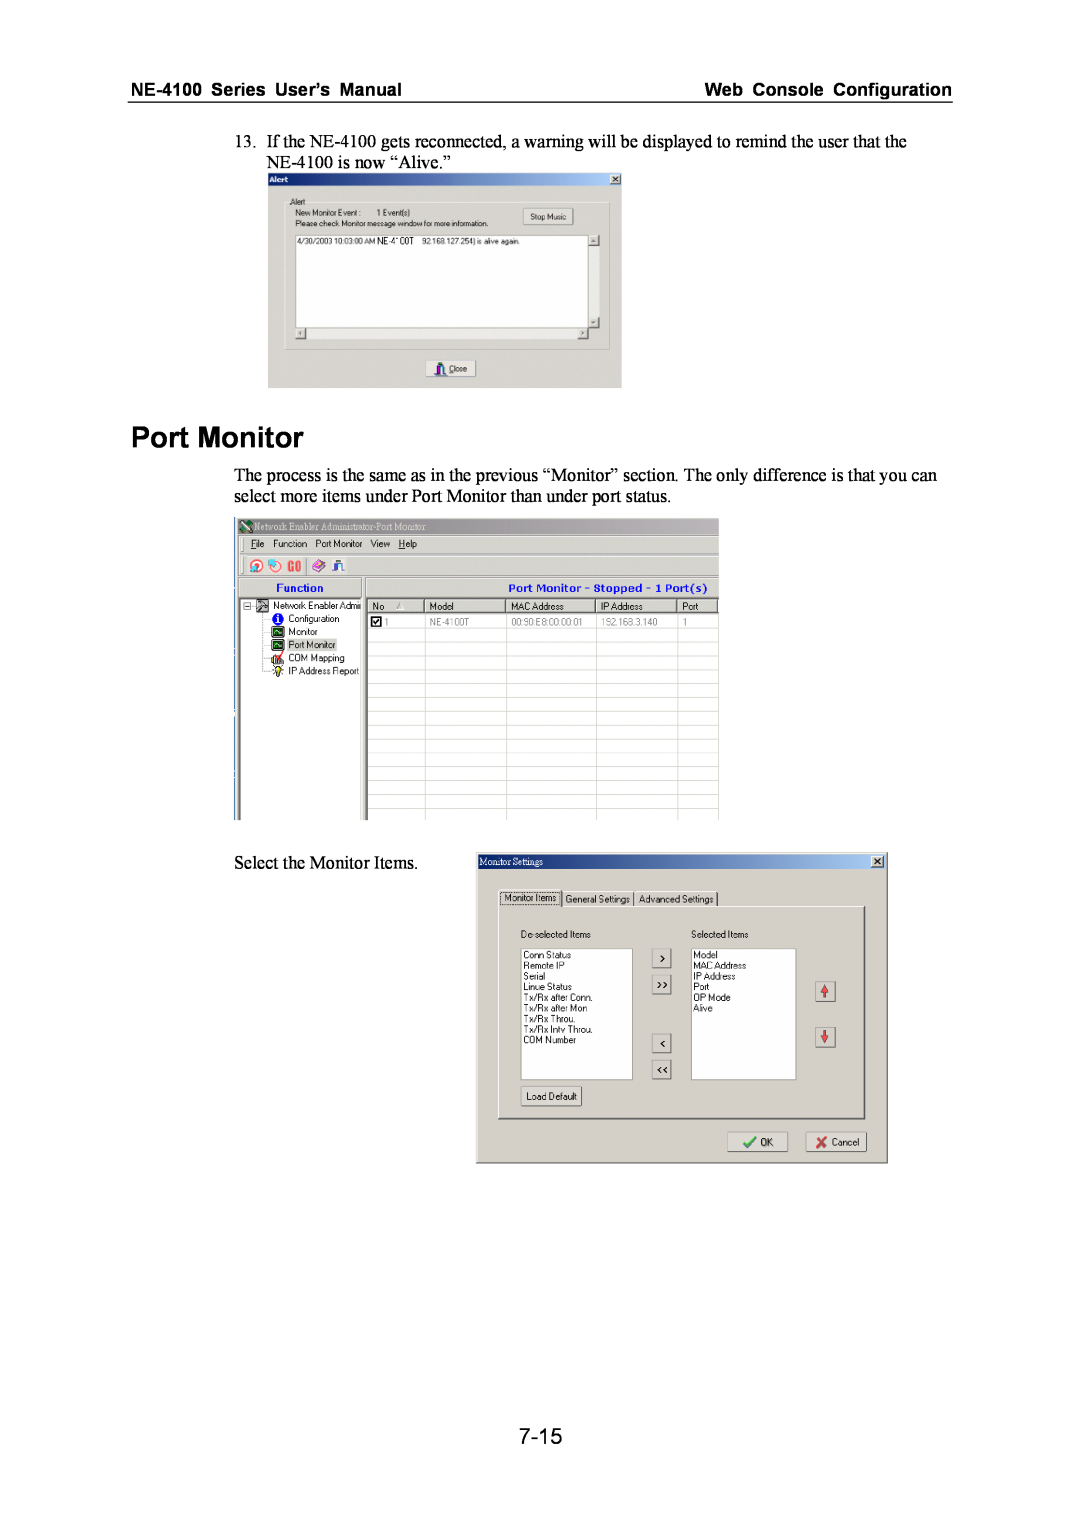 Moxa Technologies user manual Port Monitor, 7-15, NE-4100 Series User’s Manual, Web Console Configuration 